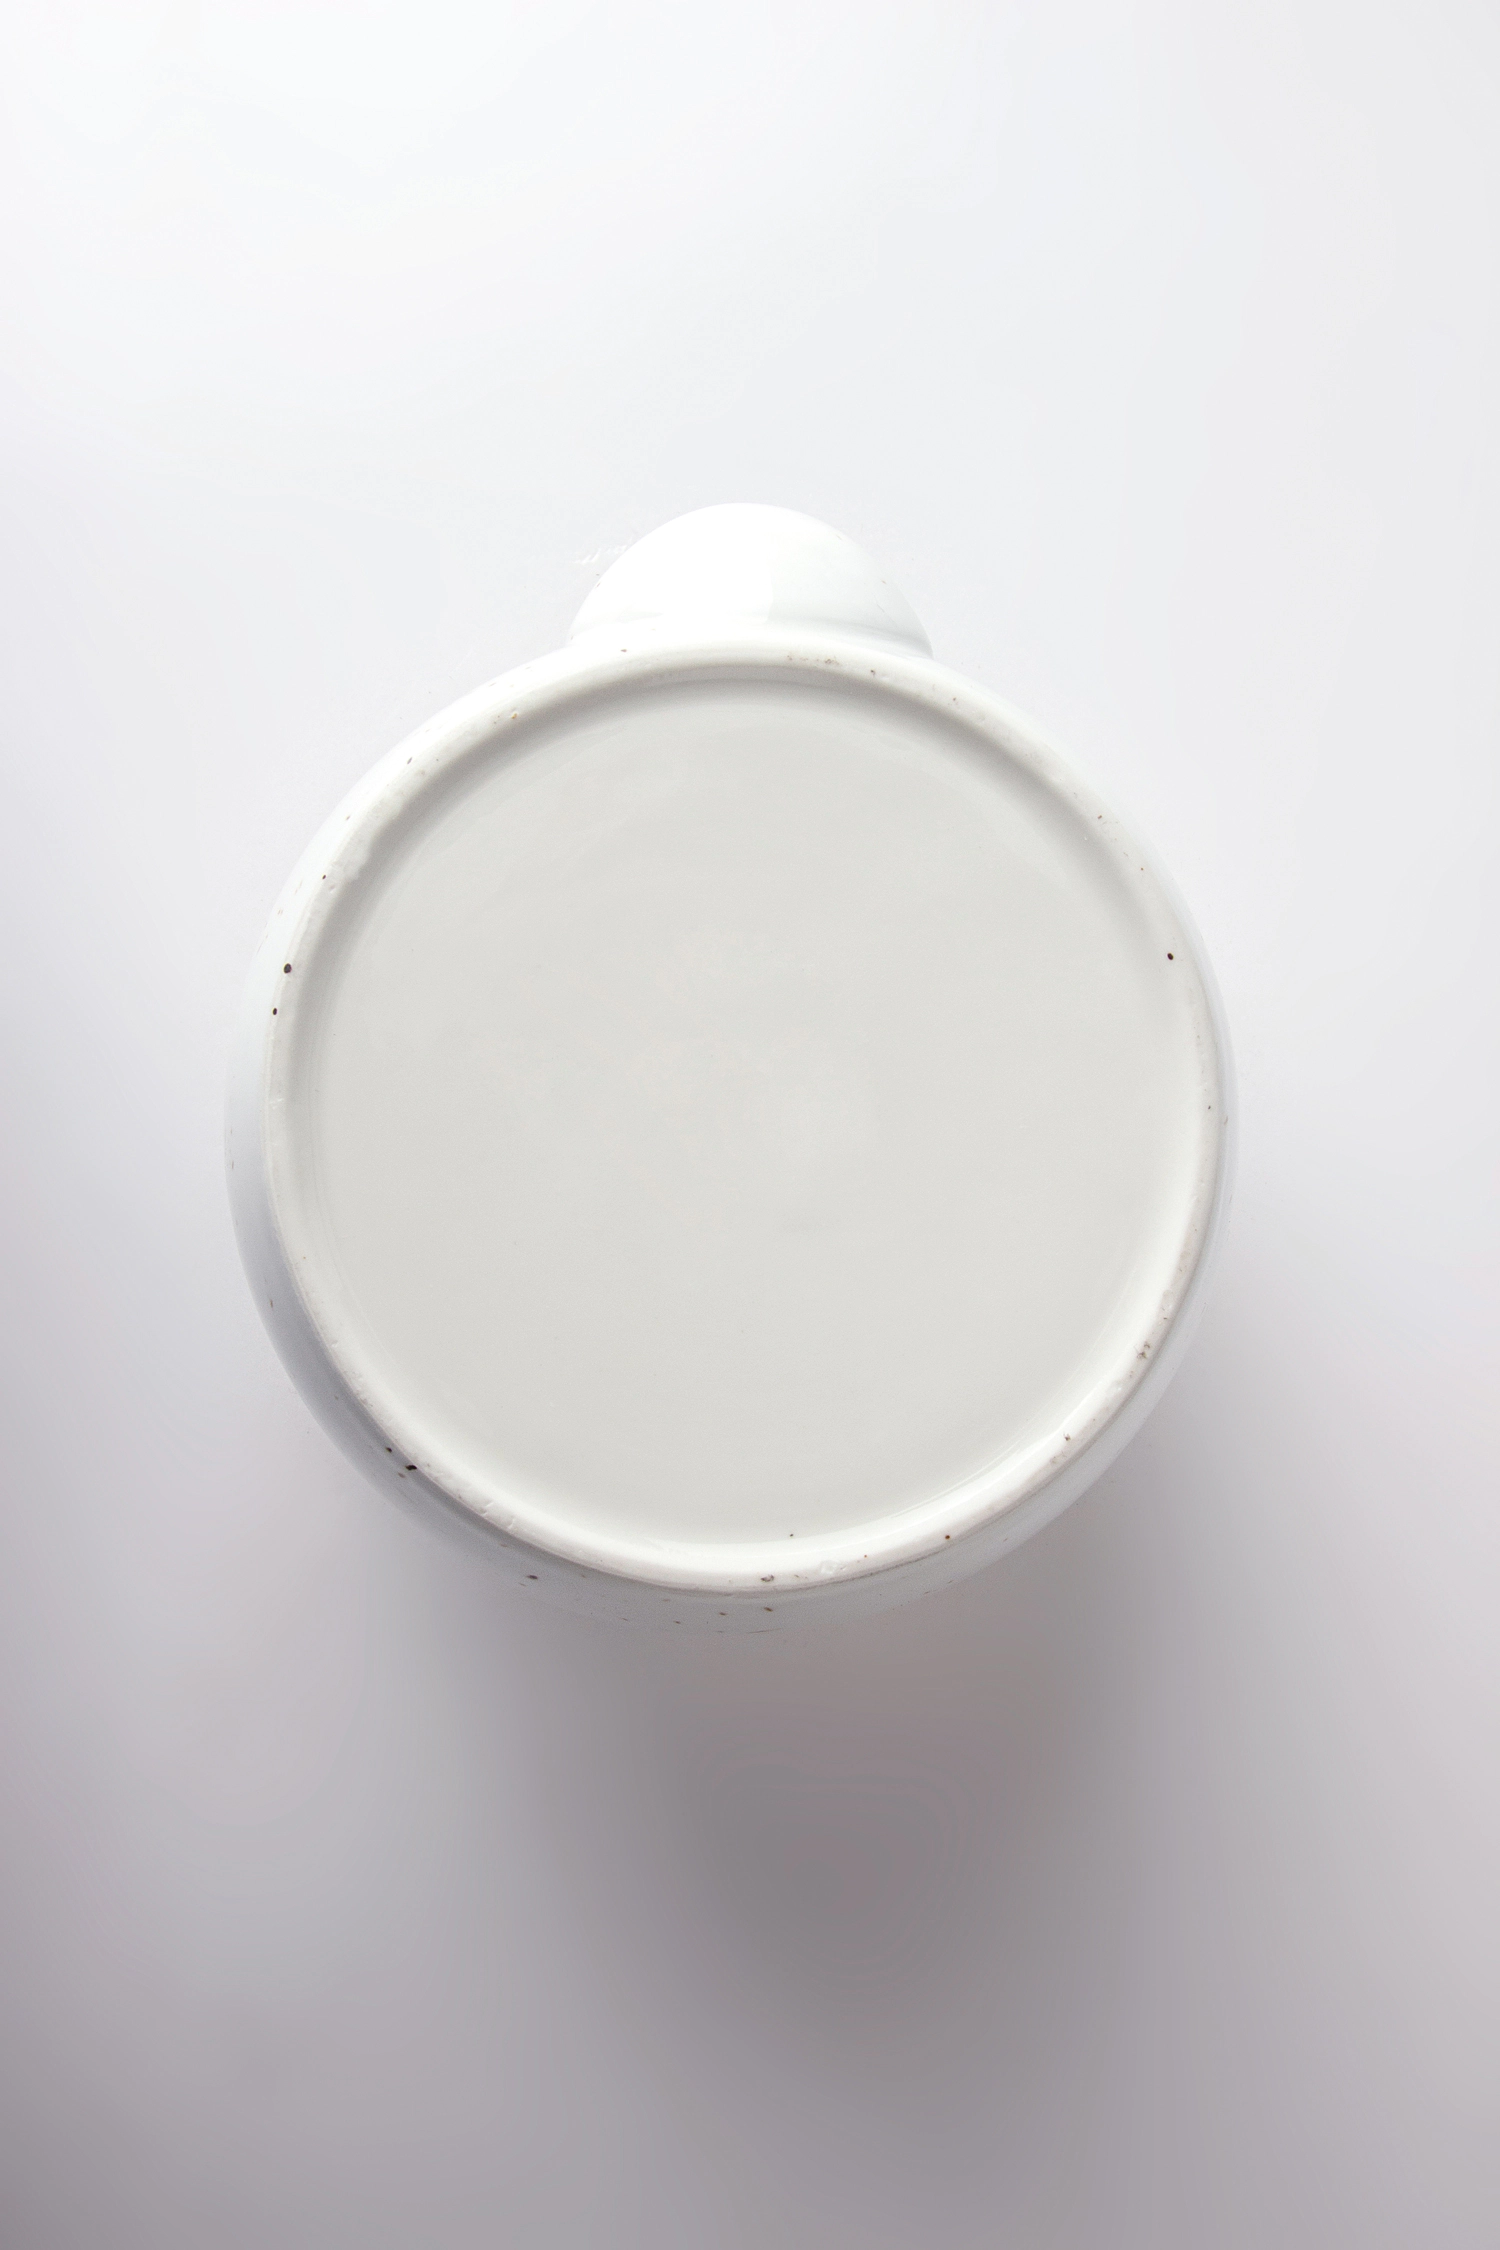 chip resistance color glazed hotel restaurant mini tea pot with lid